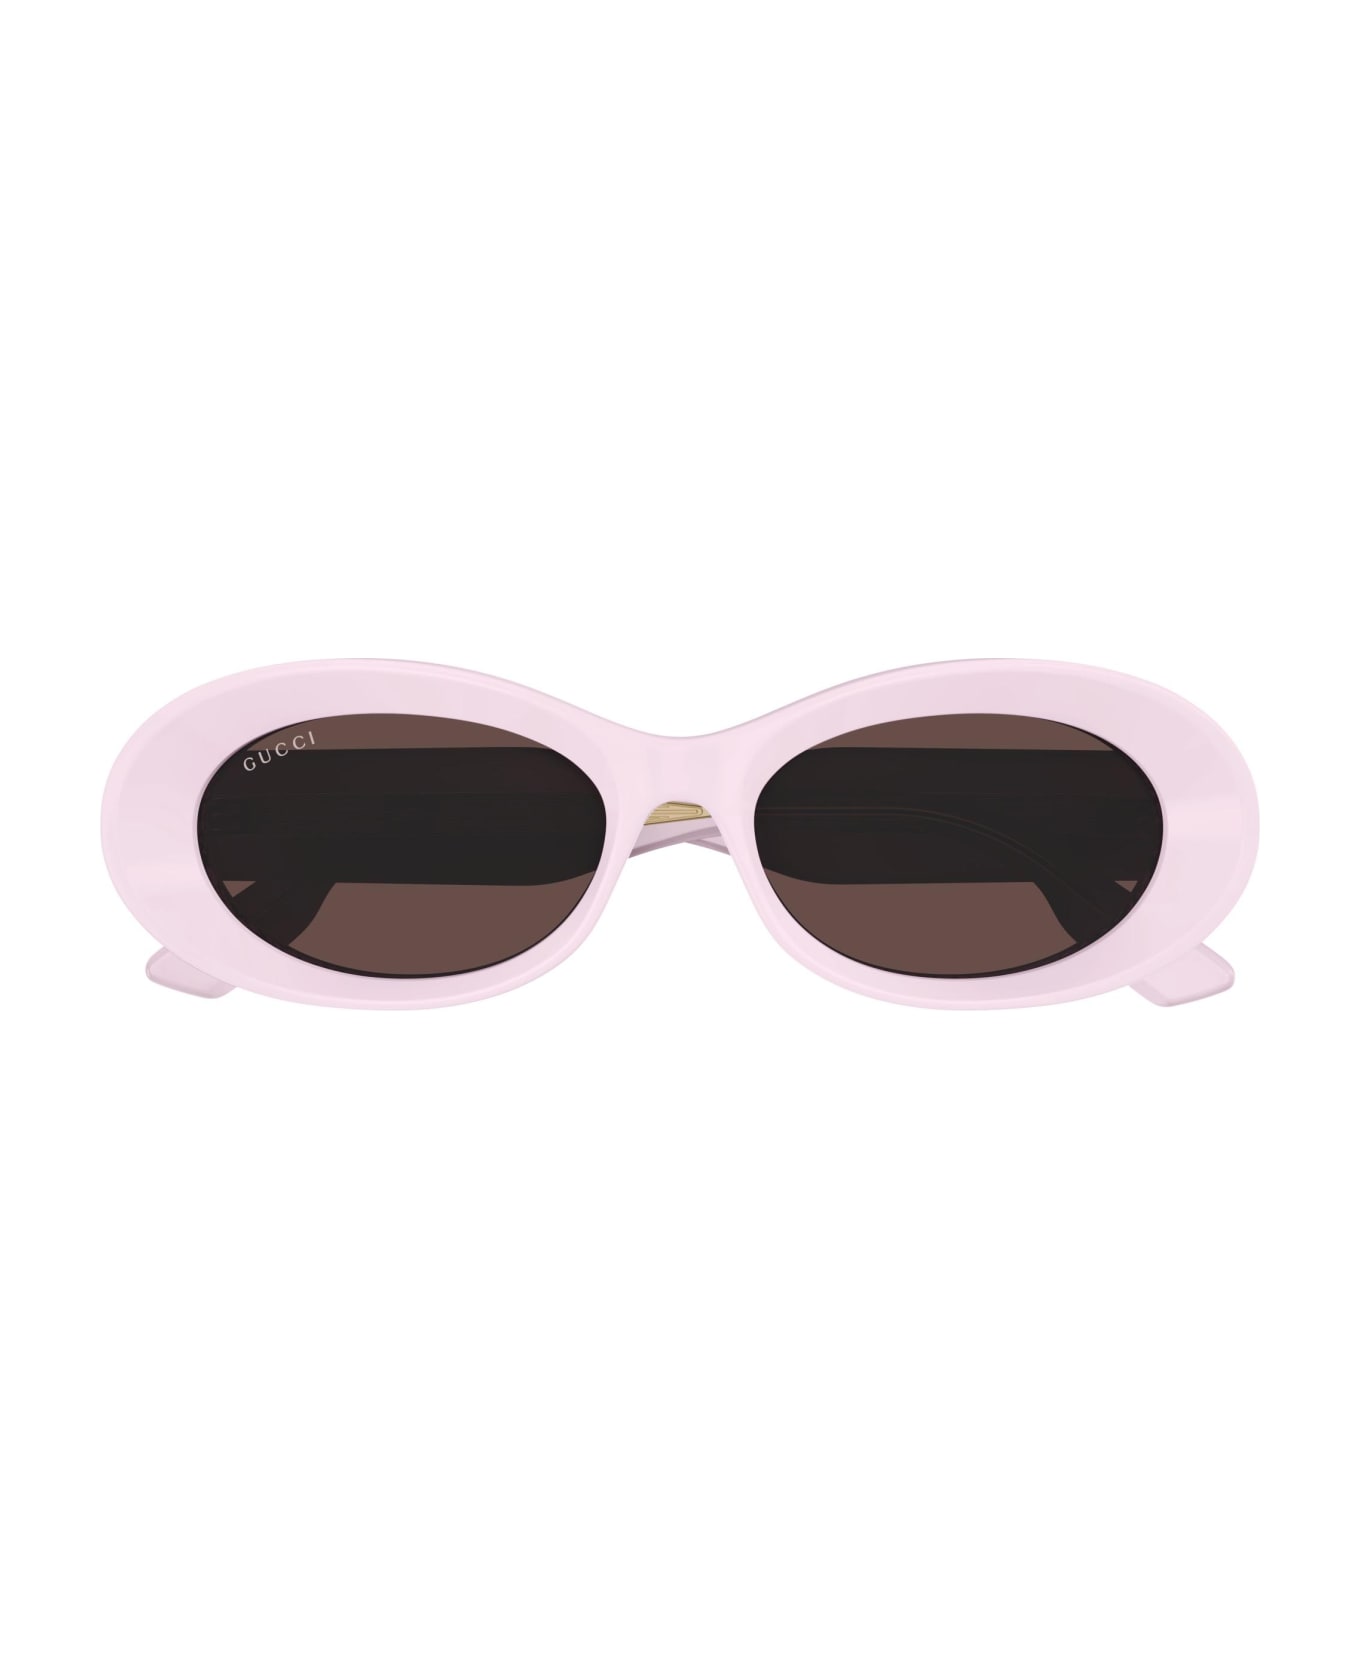 Gucci Eyewear Sunglasses - Rosa chiaro/Marrone サングラス